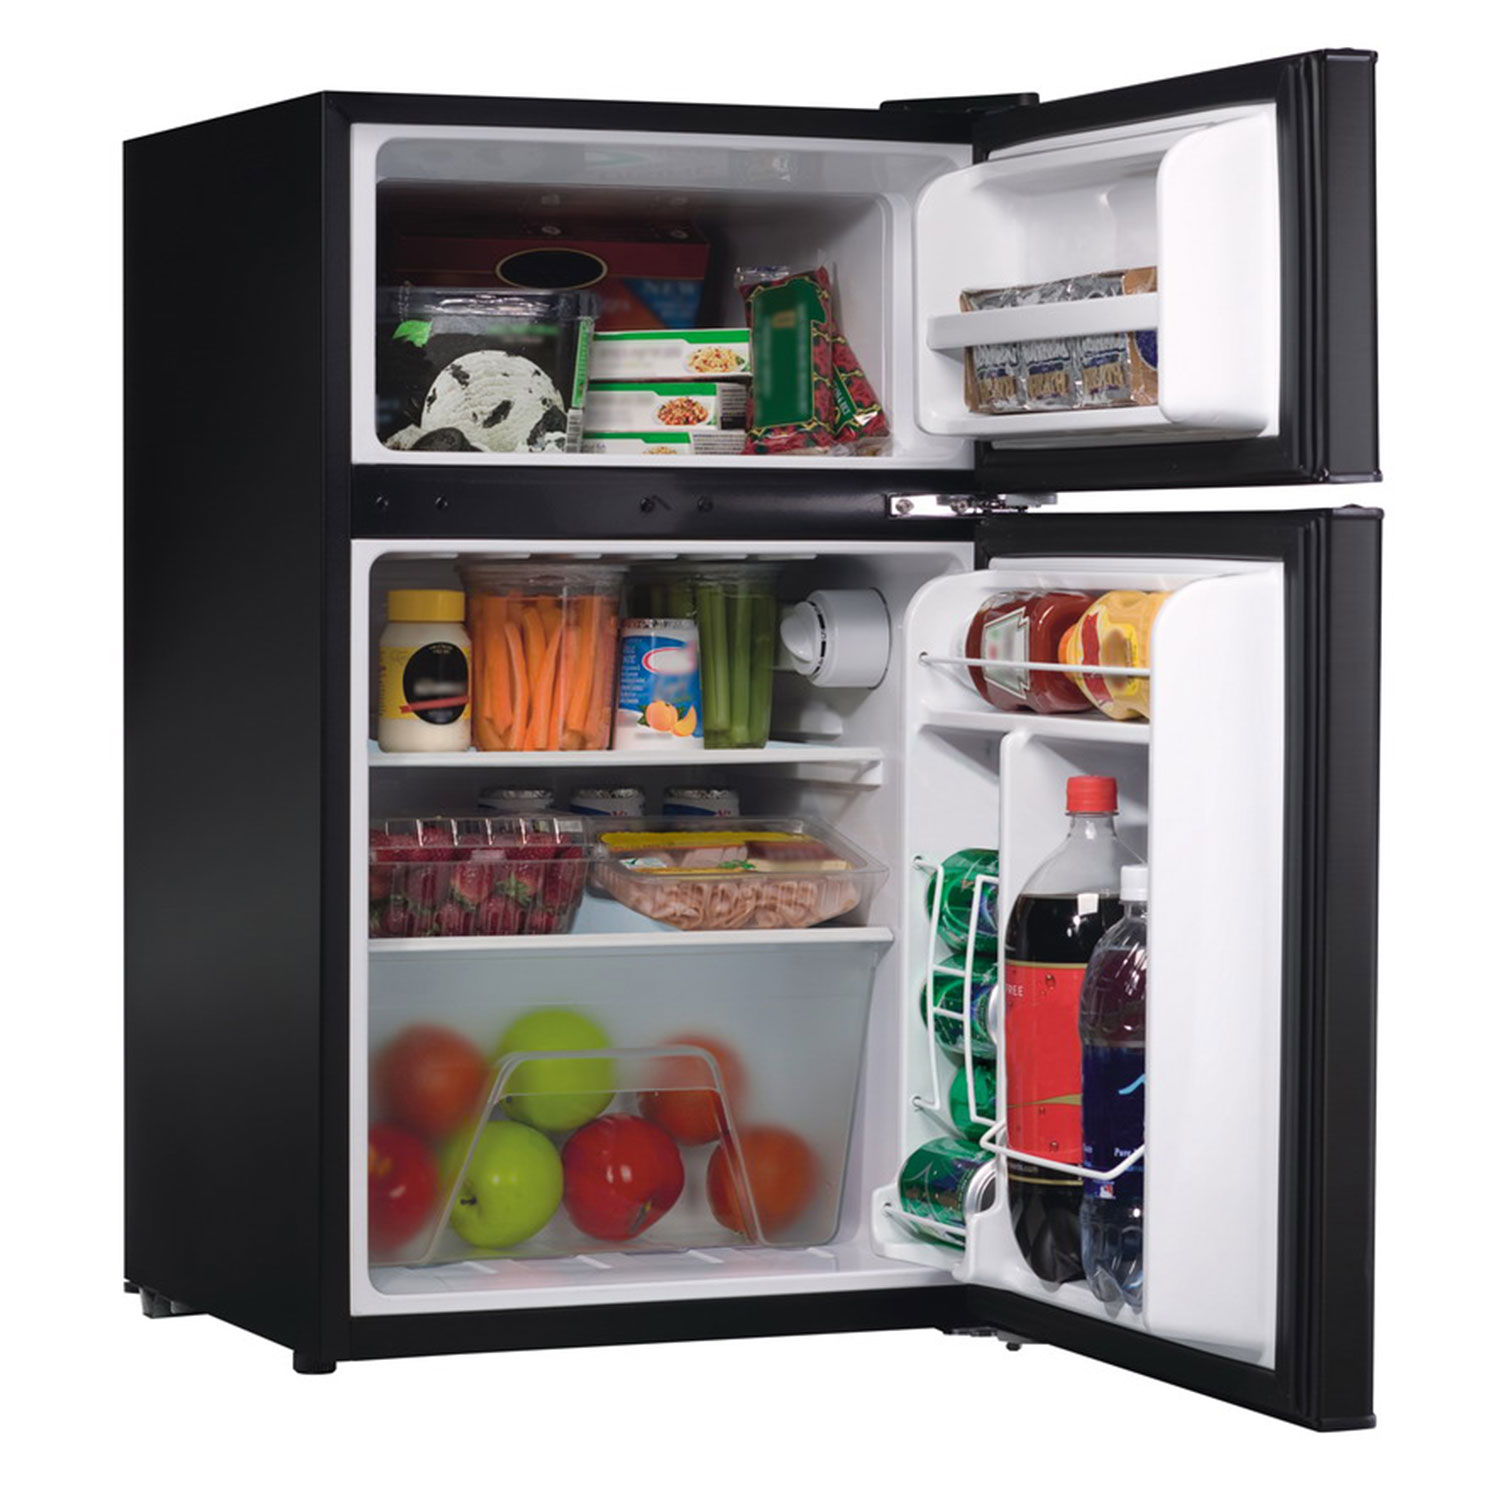 3.1 Cubic Feet Compact Refrigerator, Black - 86100